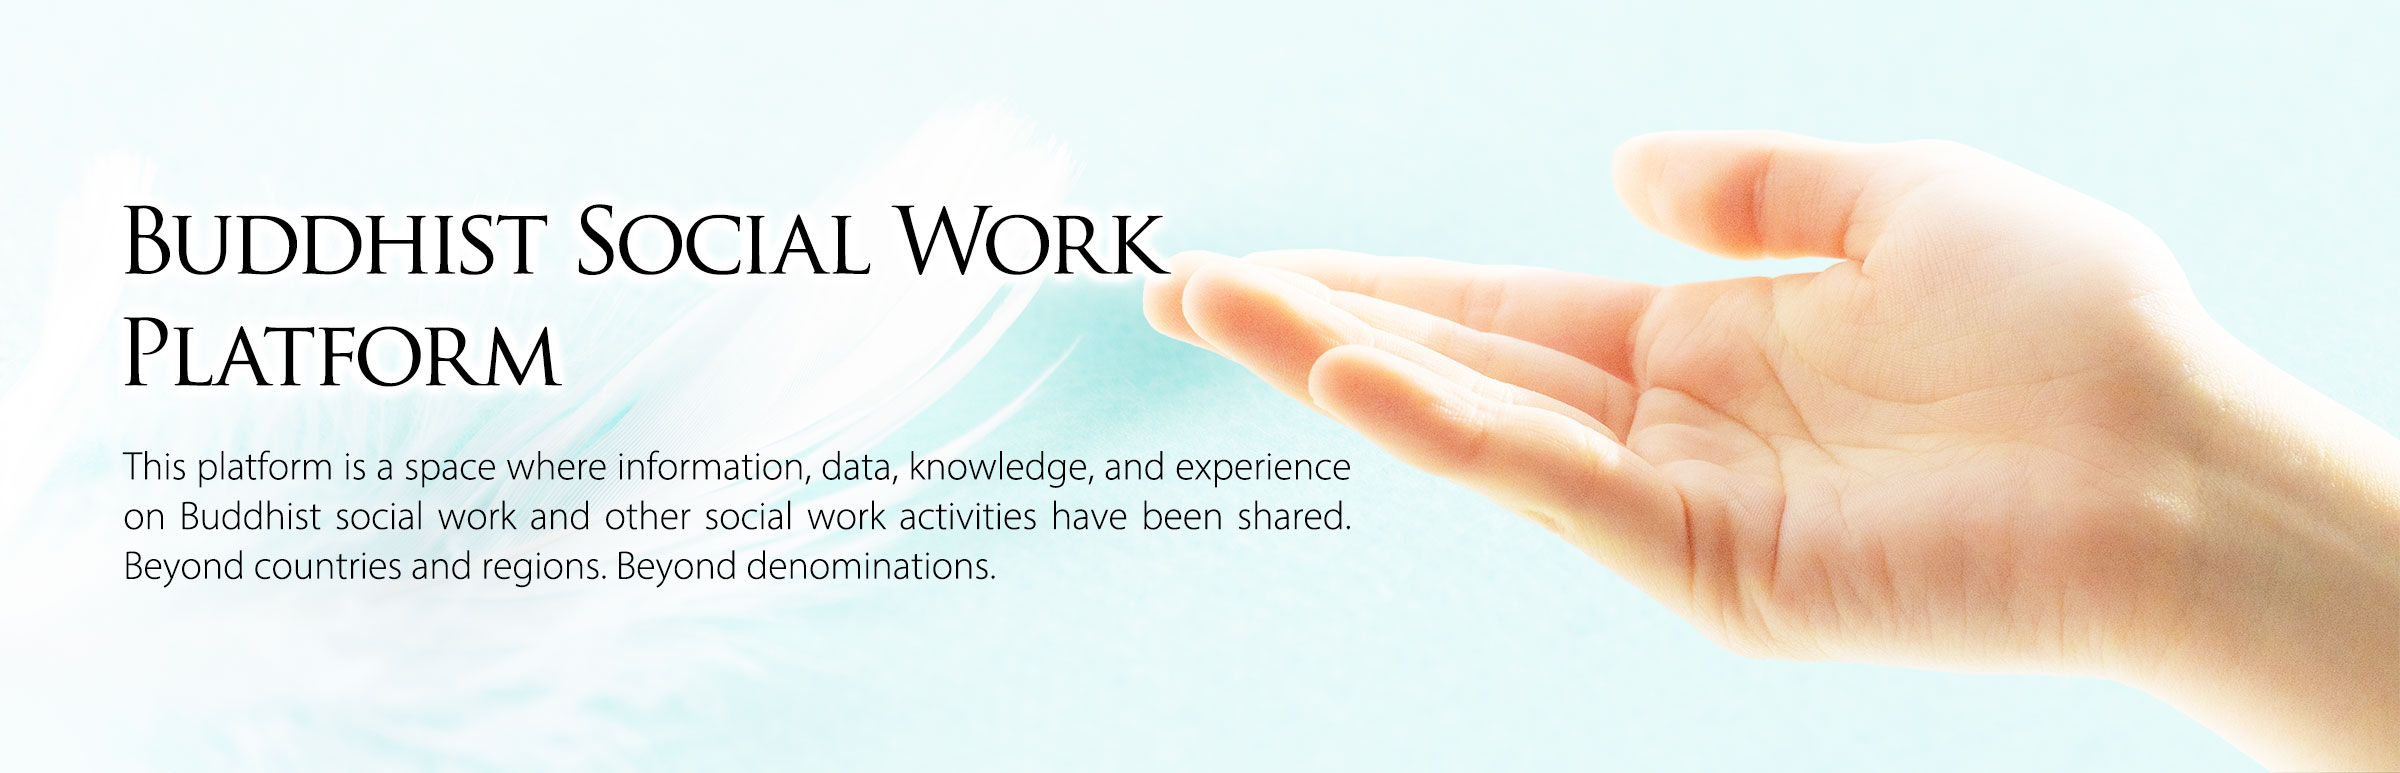 Buddhist Social Work Platform